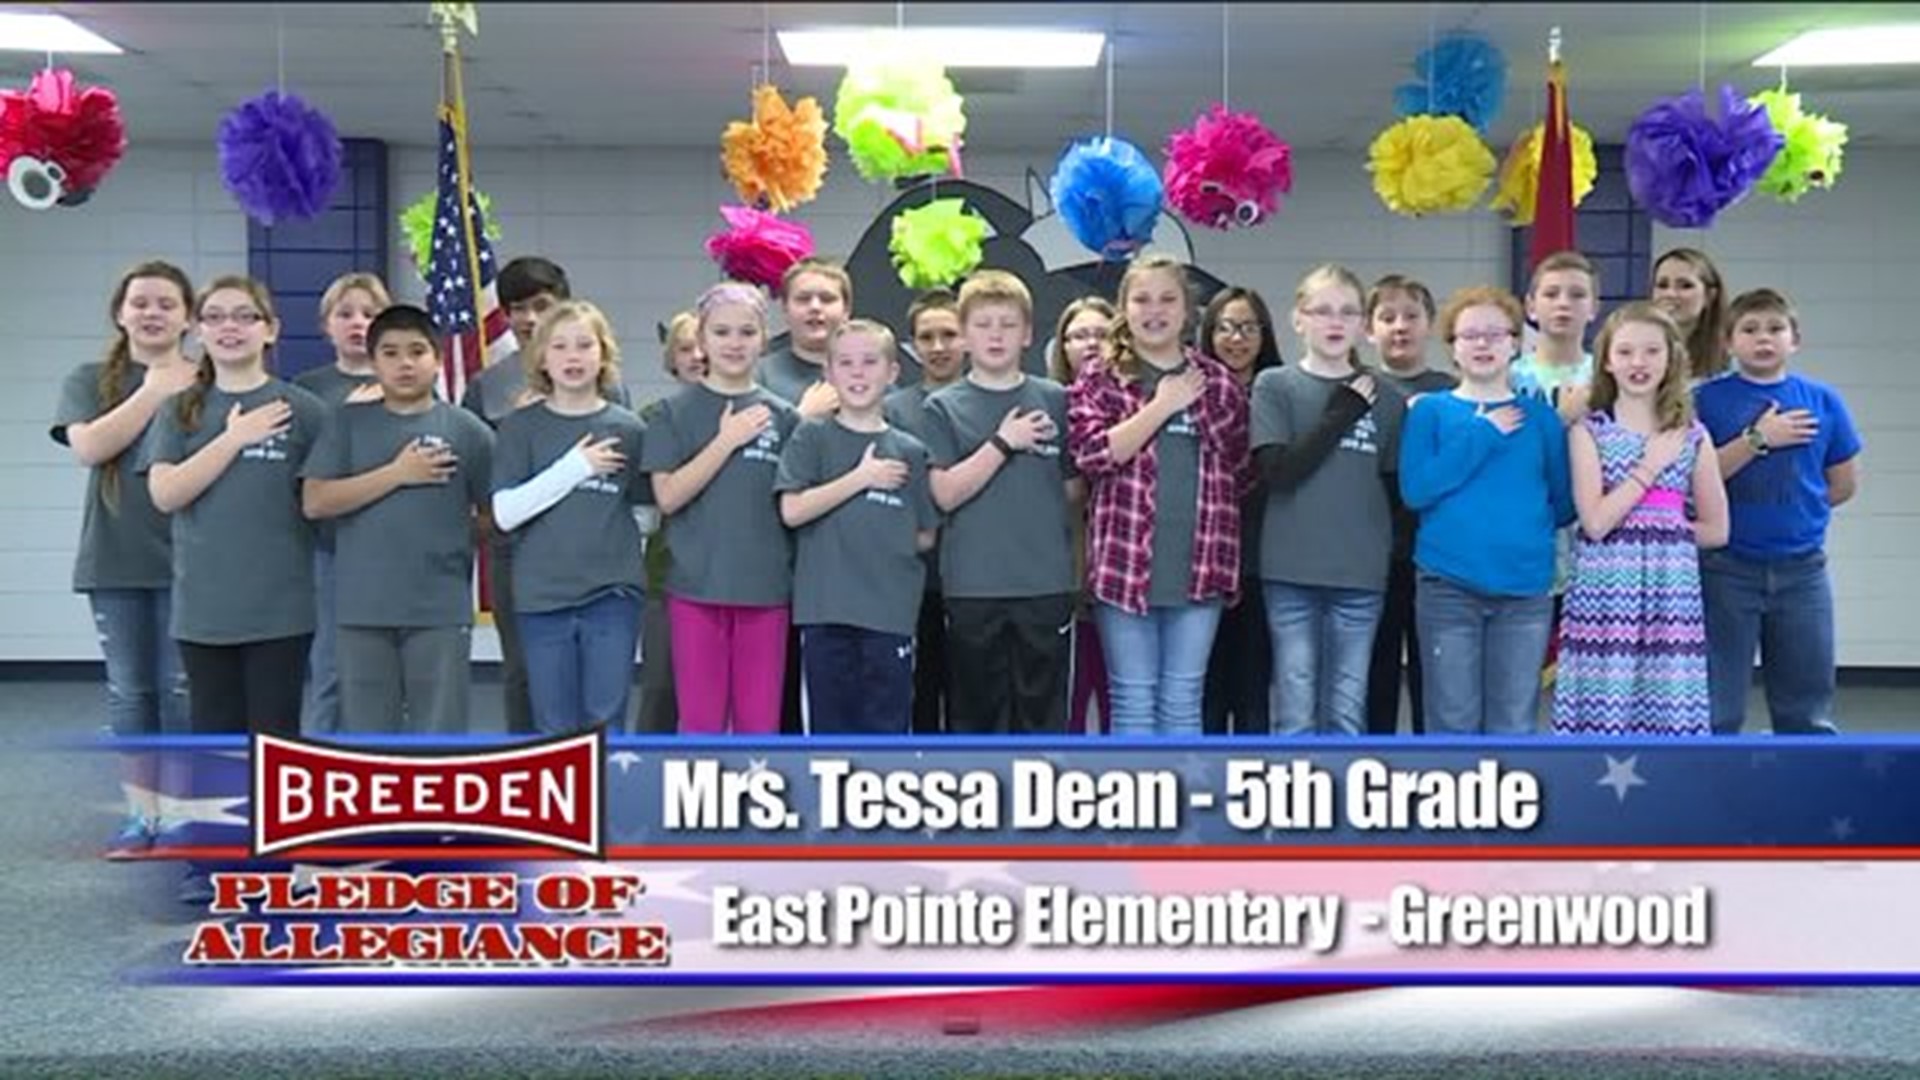 East Point Elementary - Greenwood, Mrs. Dean - Fifth Grade